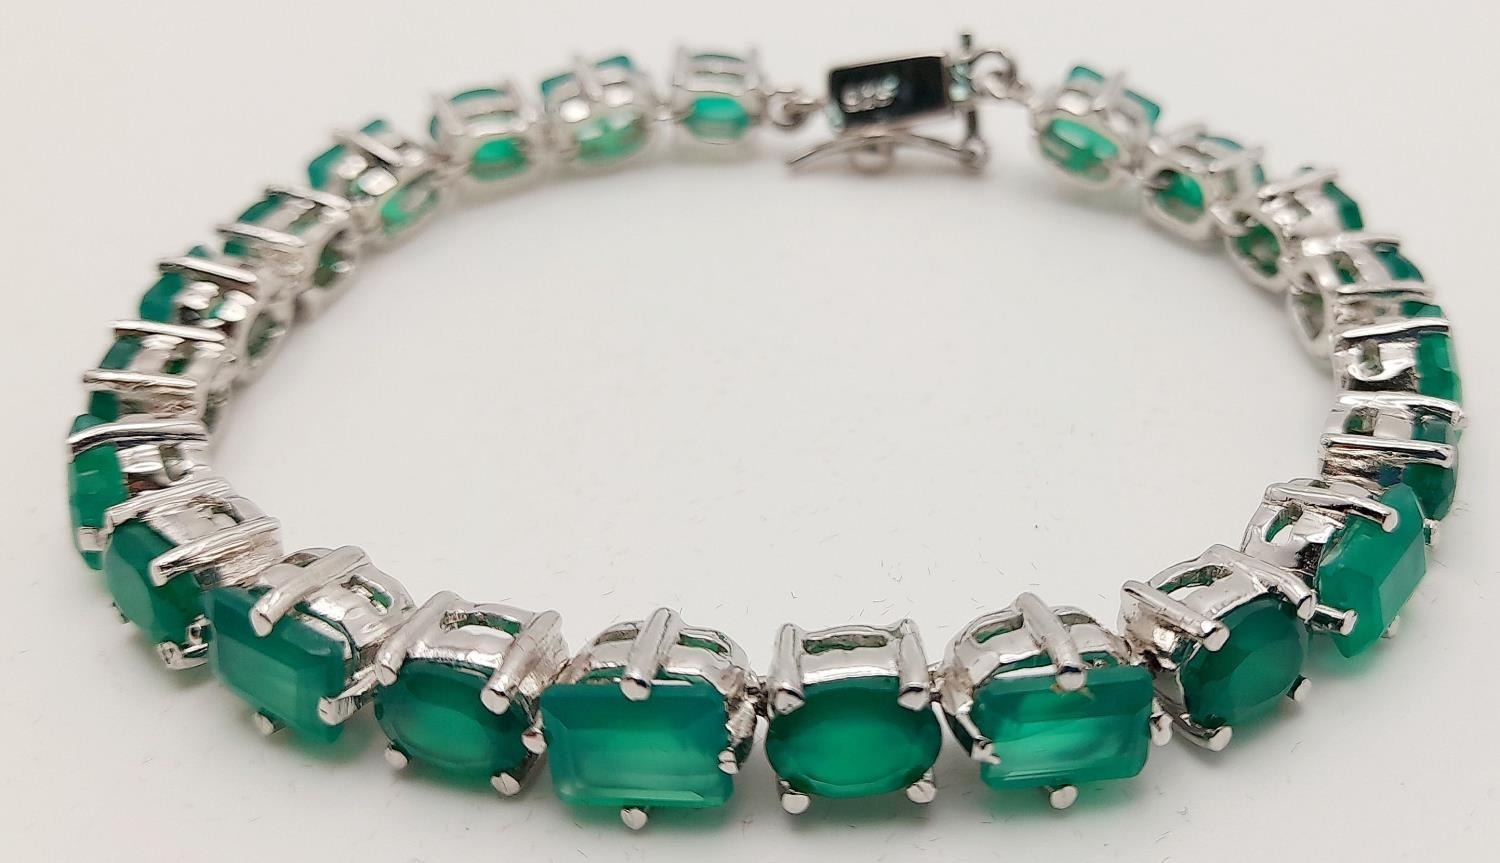 A Green Onyx Tennis Bracelet. Set in 925 Sterling silver. 36ctw. W - 24g. 18cm. Ref: HV-2167.